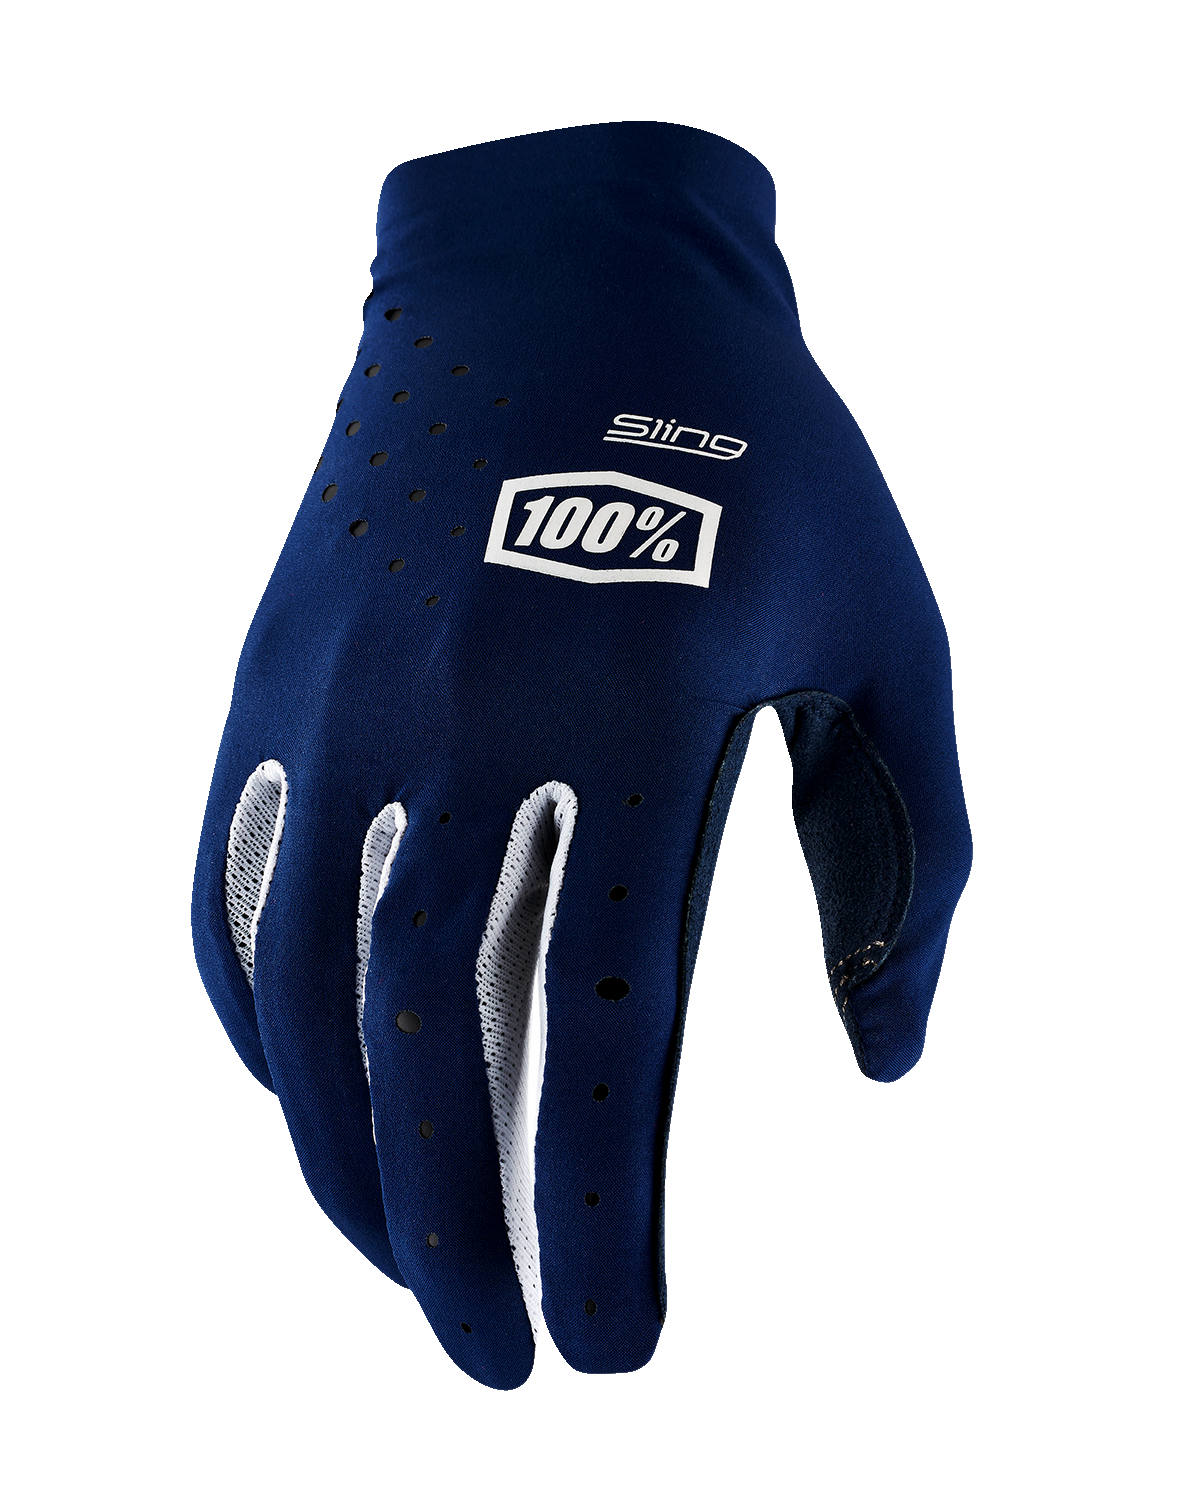 100% Sling MX Gloves - Navy - 2XL 10023-00014